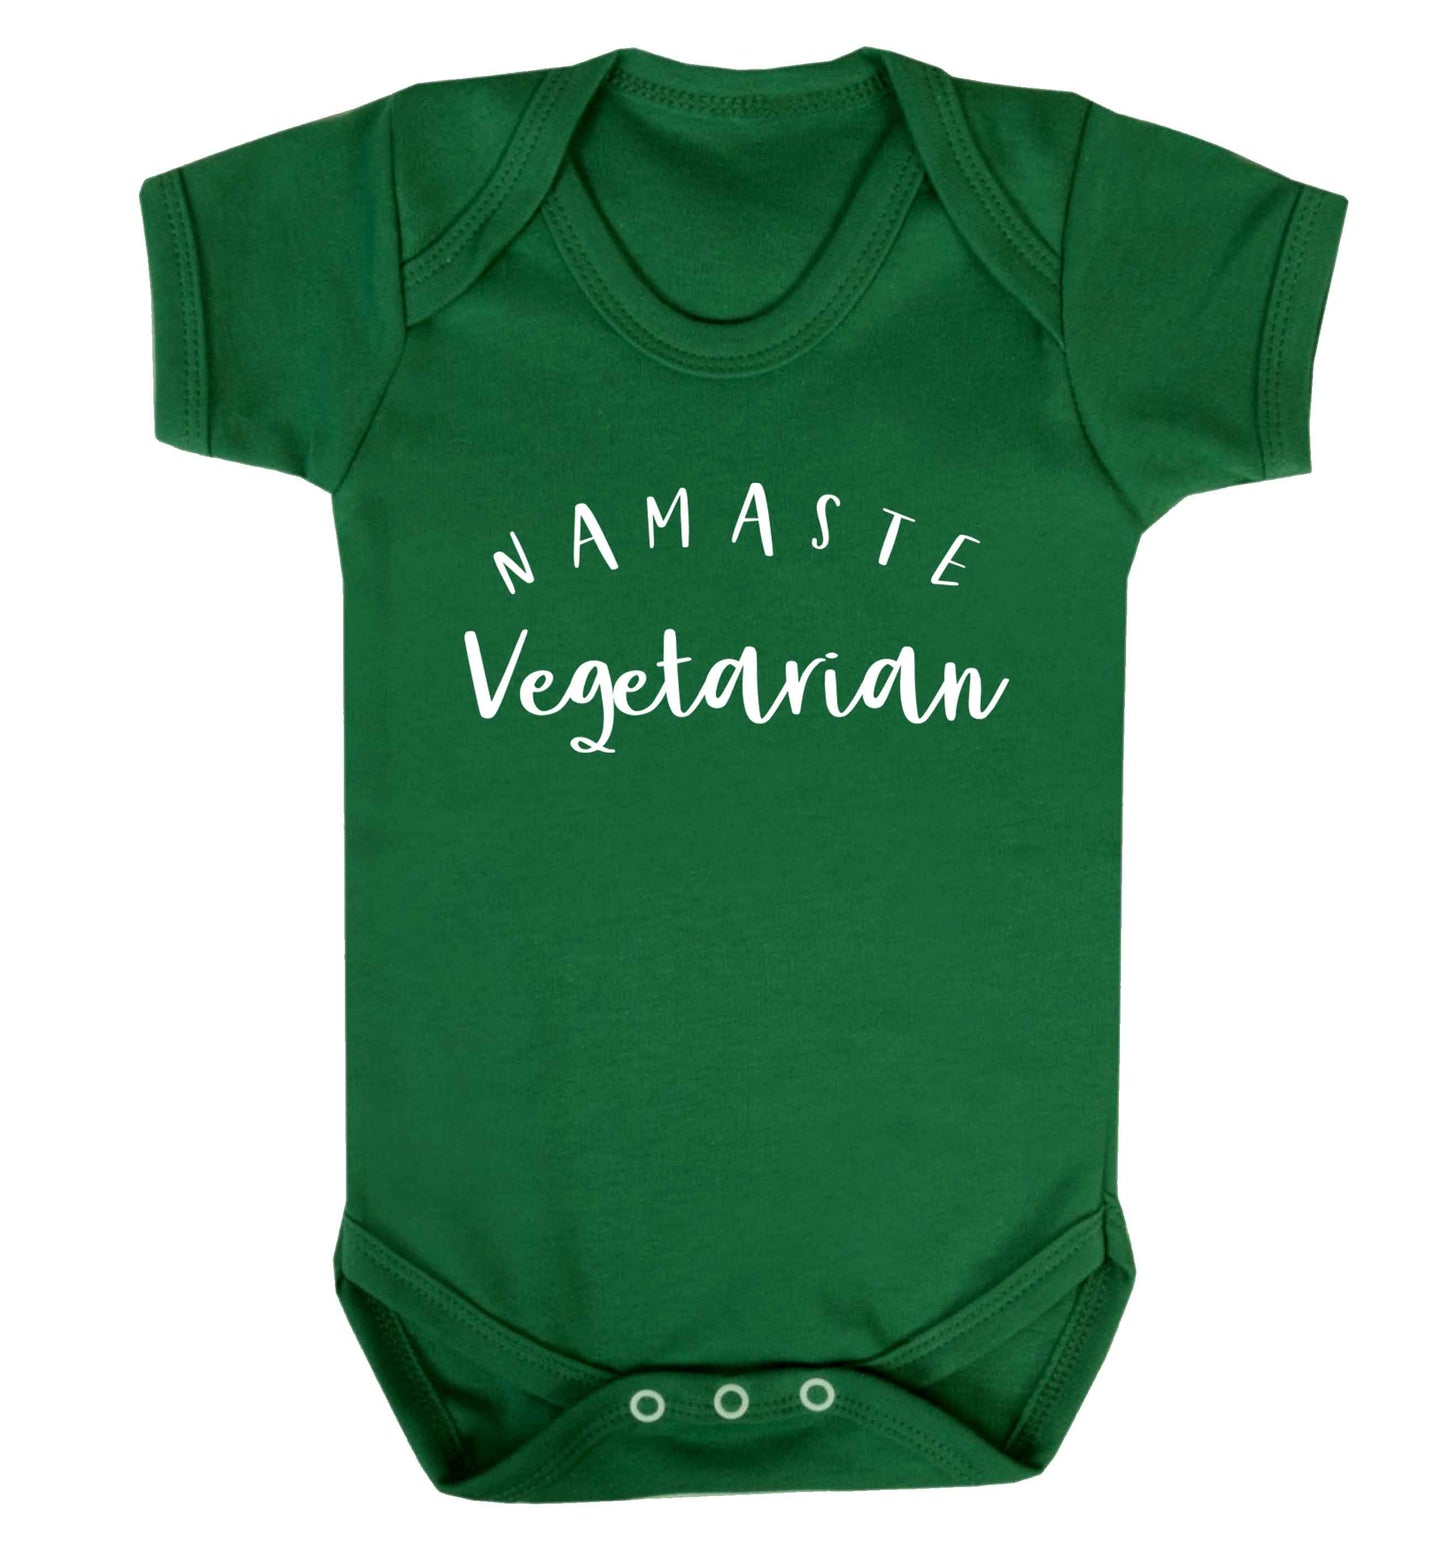 Namaste vegetarian Baby Vest green 18-24 months